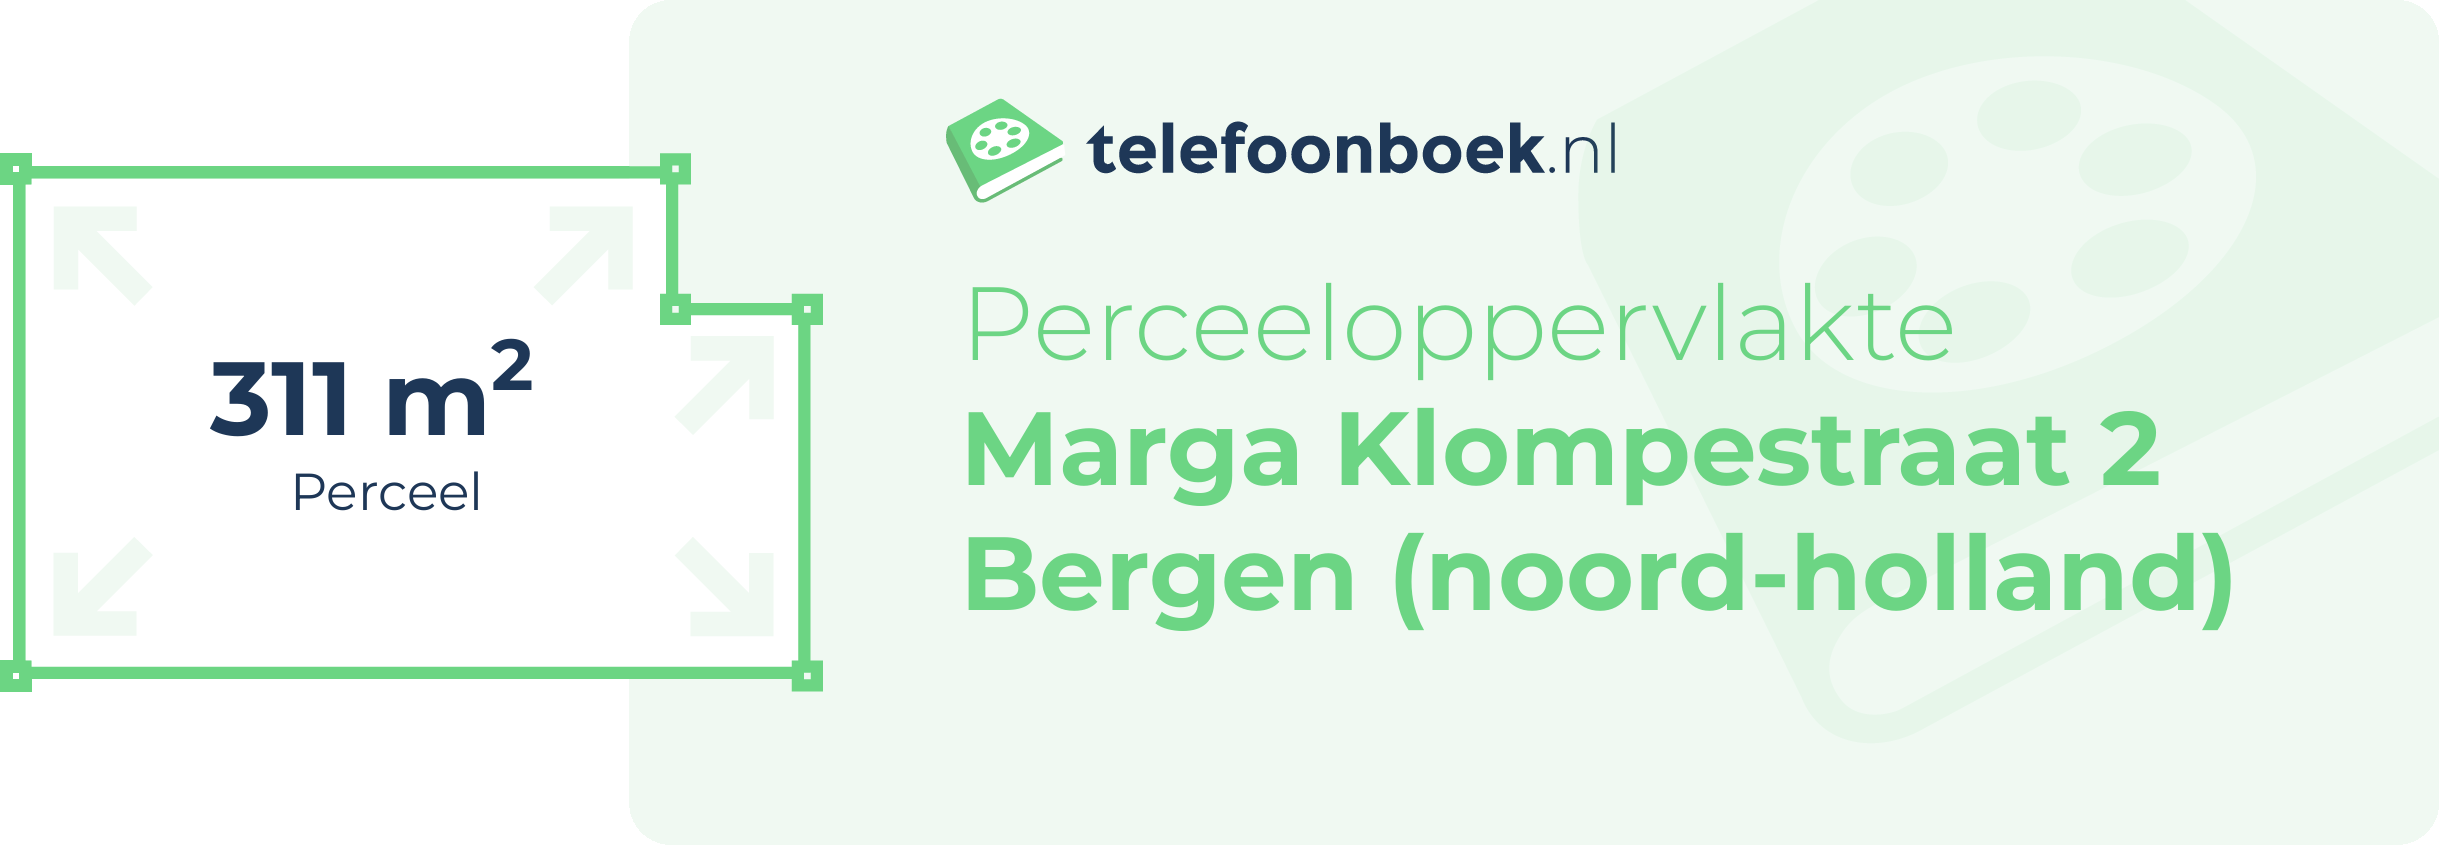 Perceeloppervlakte Marga Klompestraat 2 Bergen (Noord-Holland)